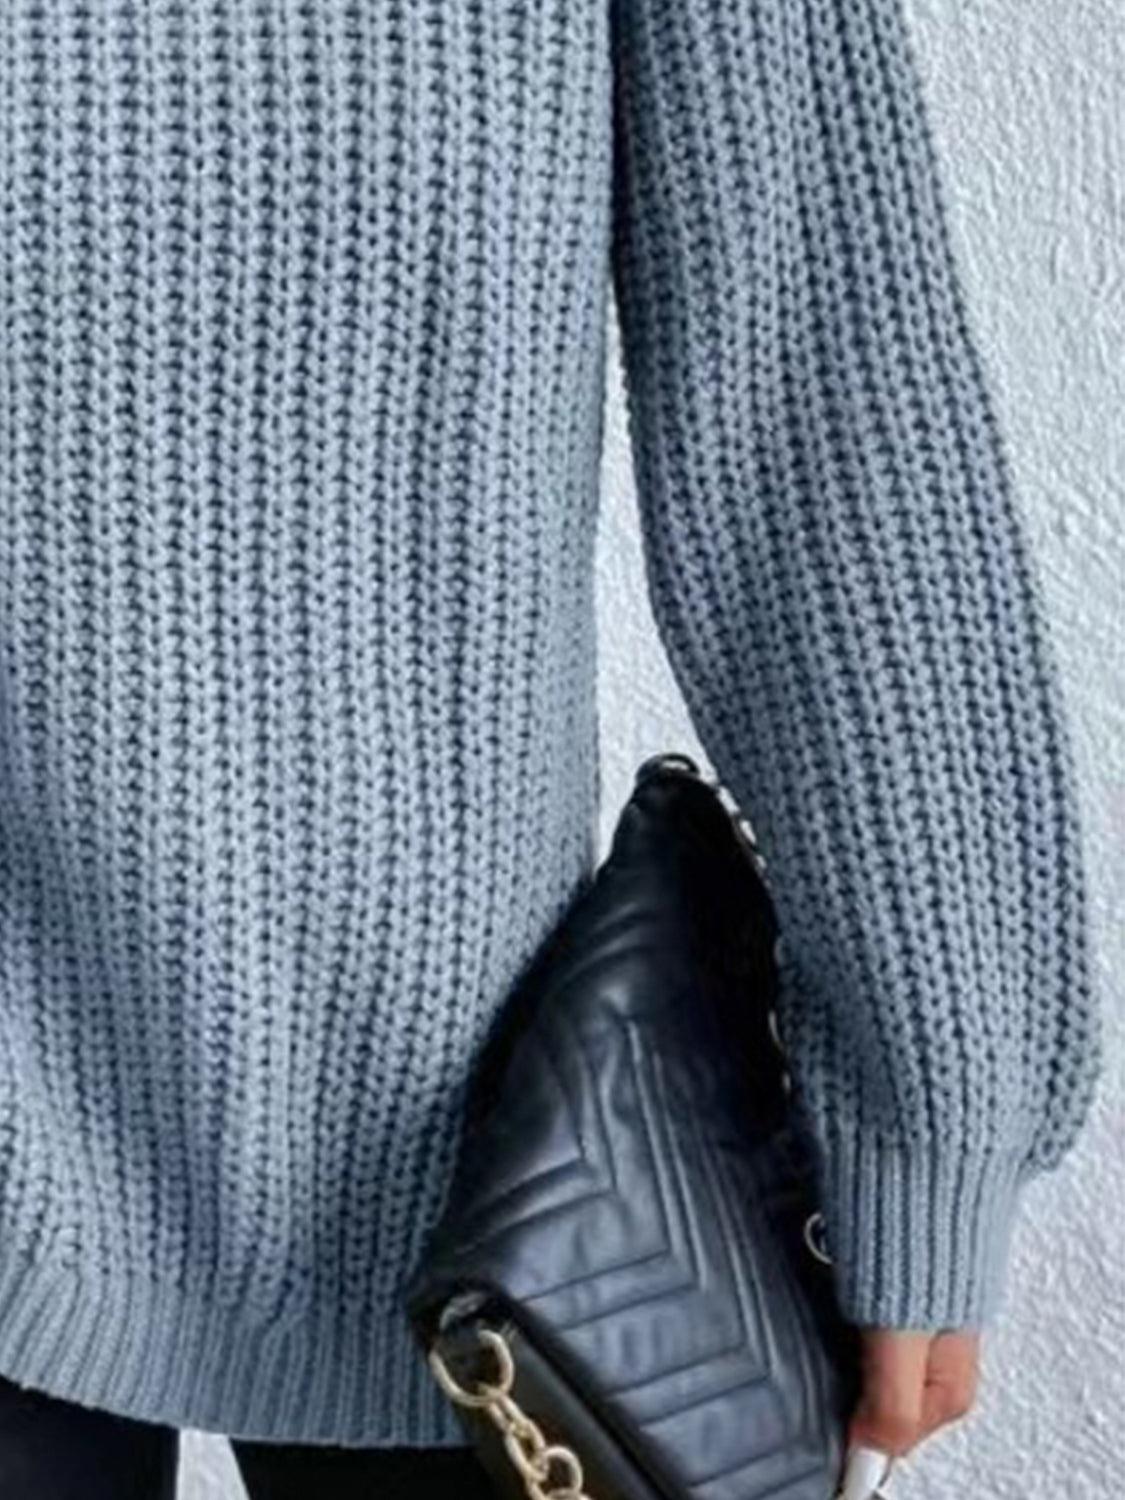 Full Size Turtleneck Rib-Knit Slit Sweater - Closet of Ren